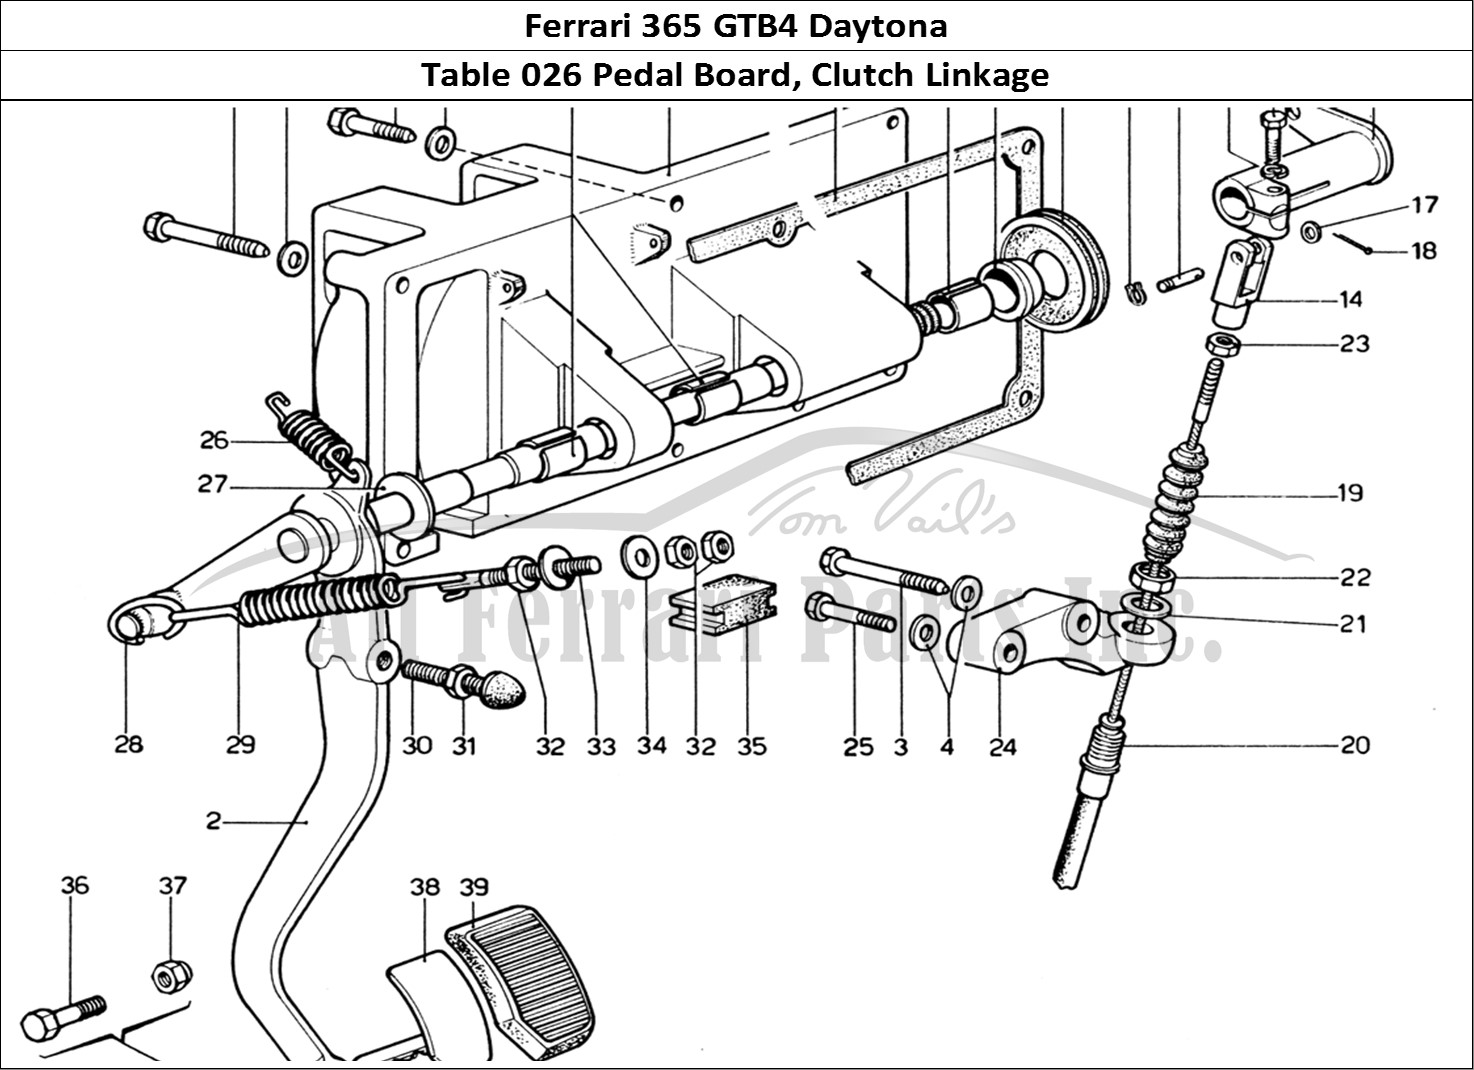 Ferrari Parts Ferrari 365 GTB4 Daytona (1969) Page 026 Pedal Board & Clutch Cont